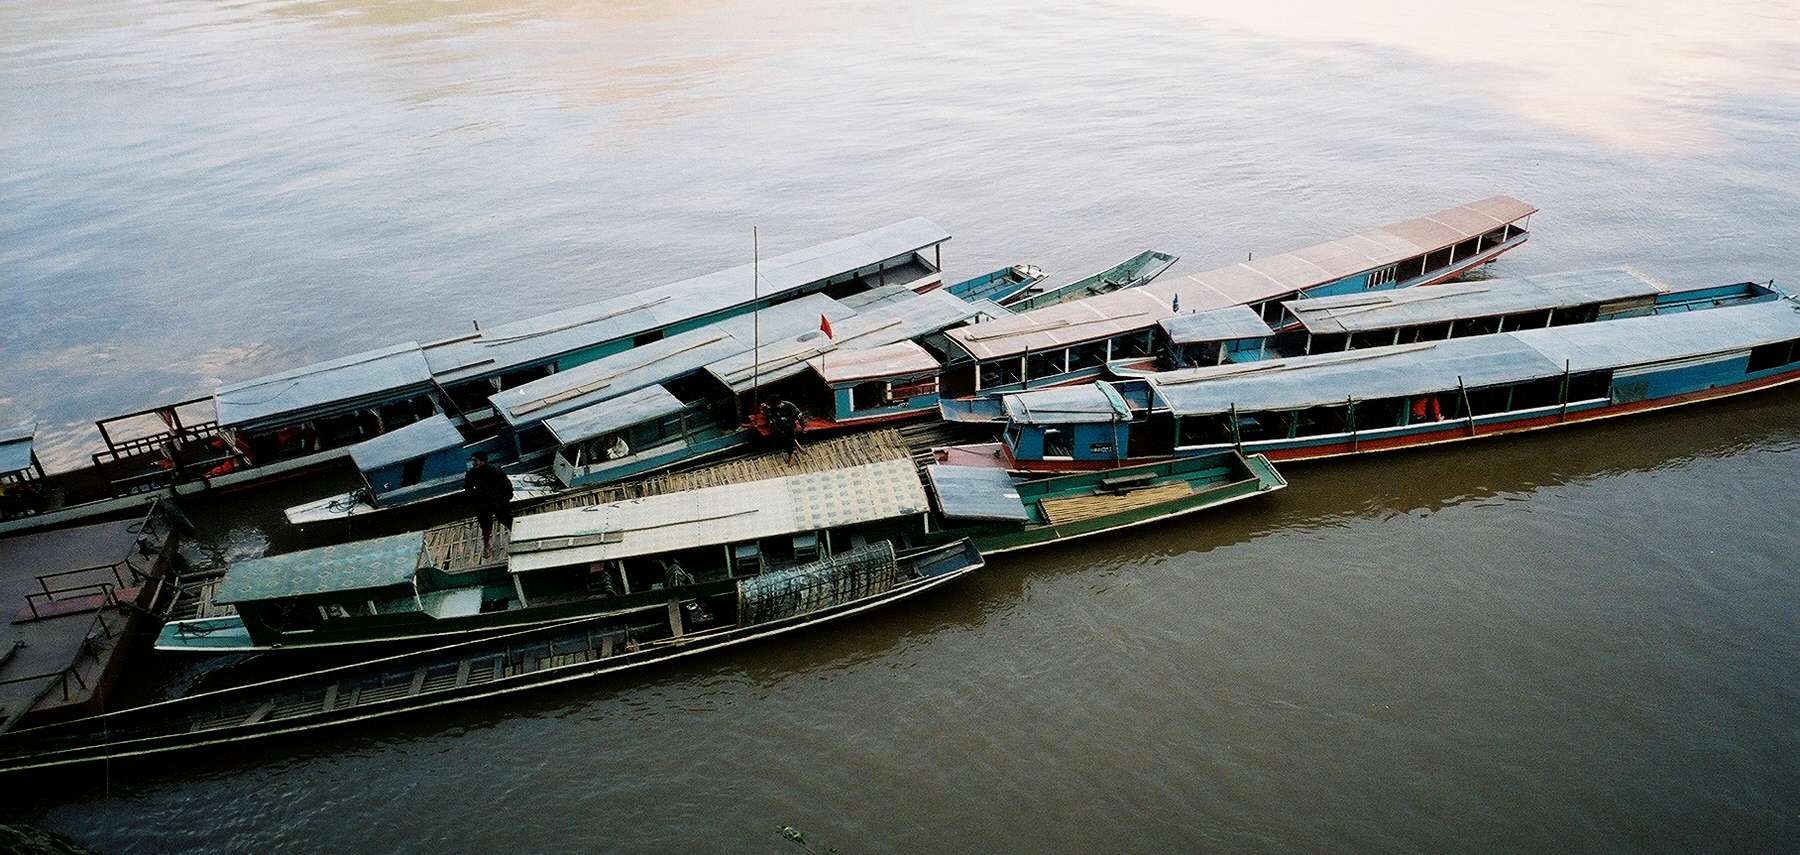 Copy of Laos_boats.jpg